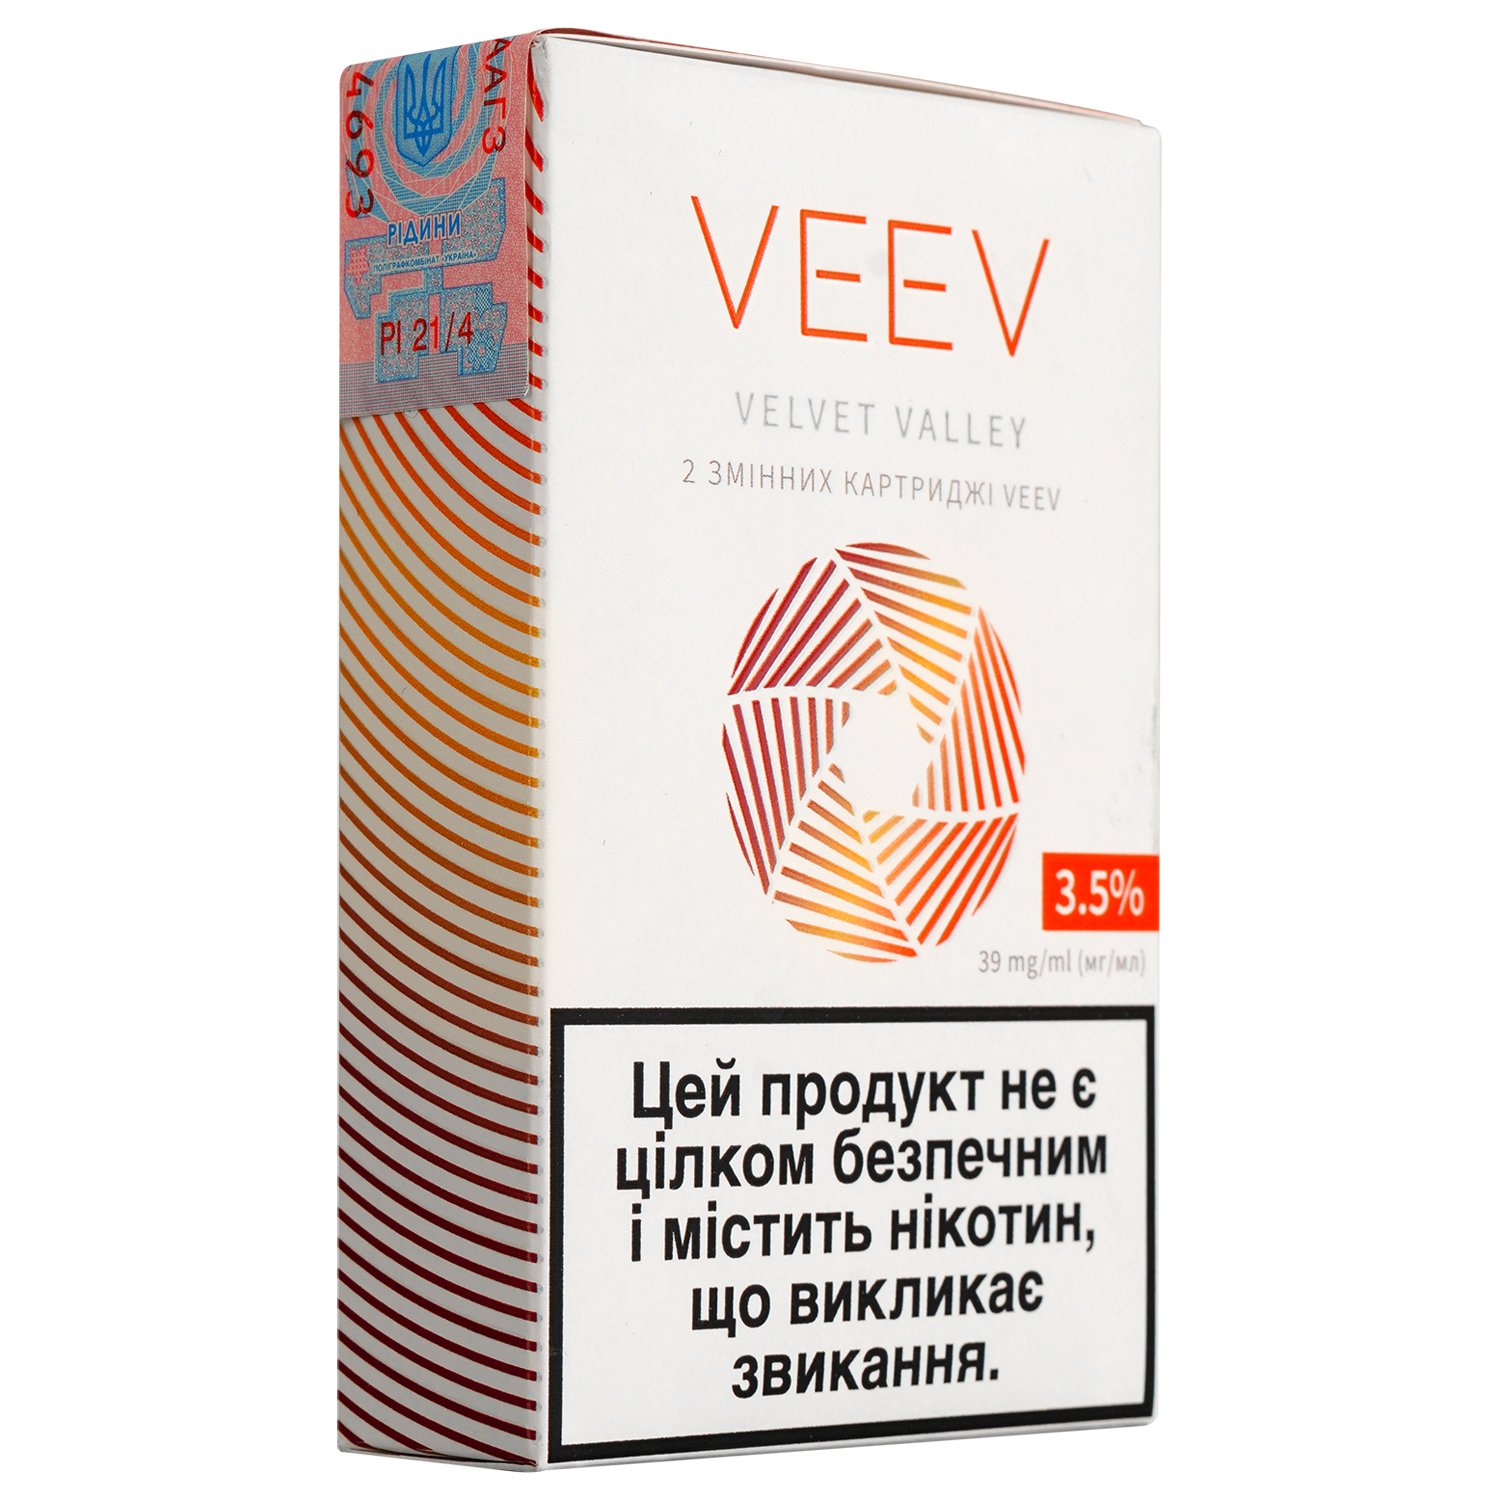 Картридж для POD систем Veev Velvet Valley, 3,5%, 2 шт. - фото 2